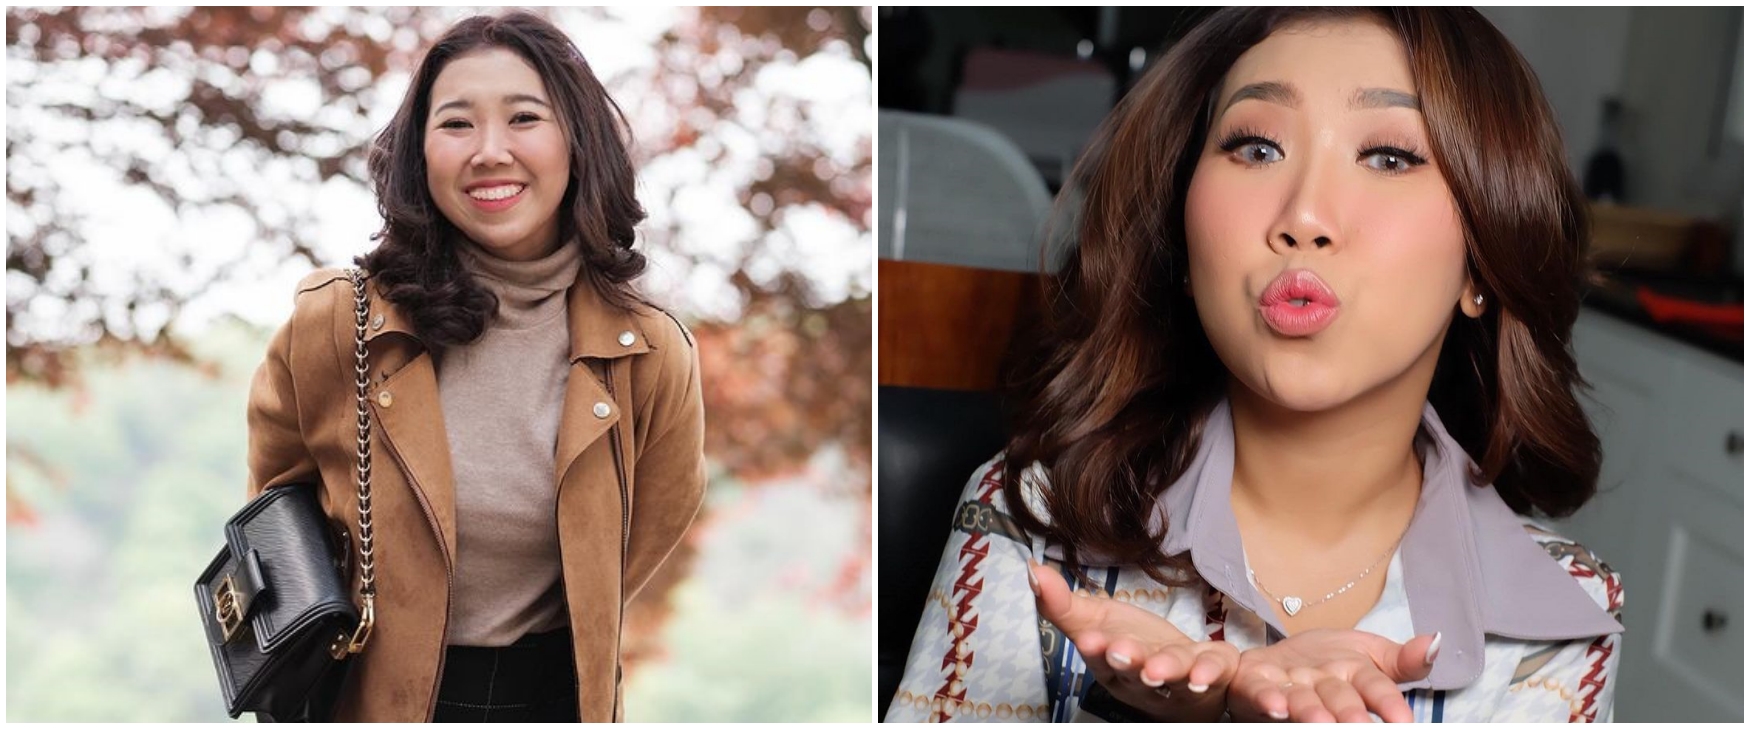 Dinyinyirin netizen wajahnya cantik berkat makeup dan filter, Kiky Saputri beri jawaban skakmat